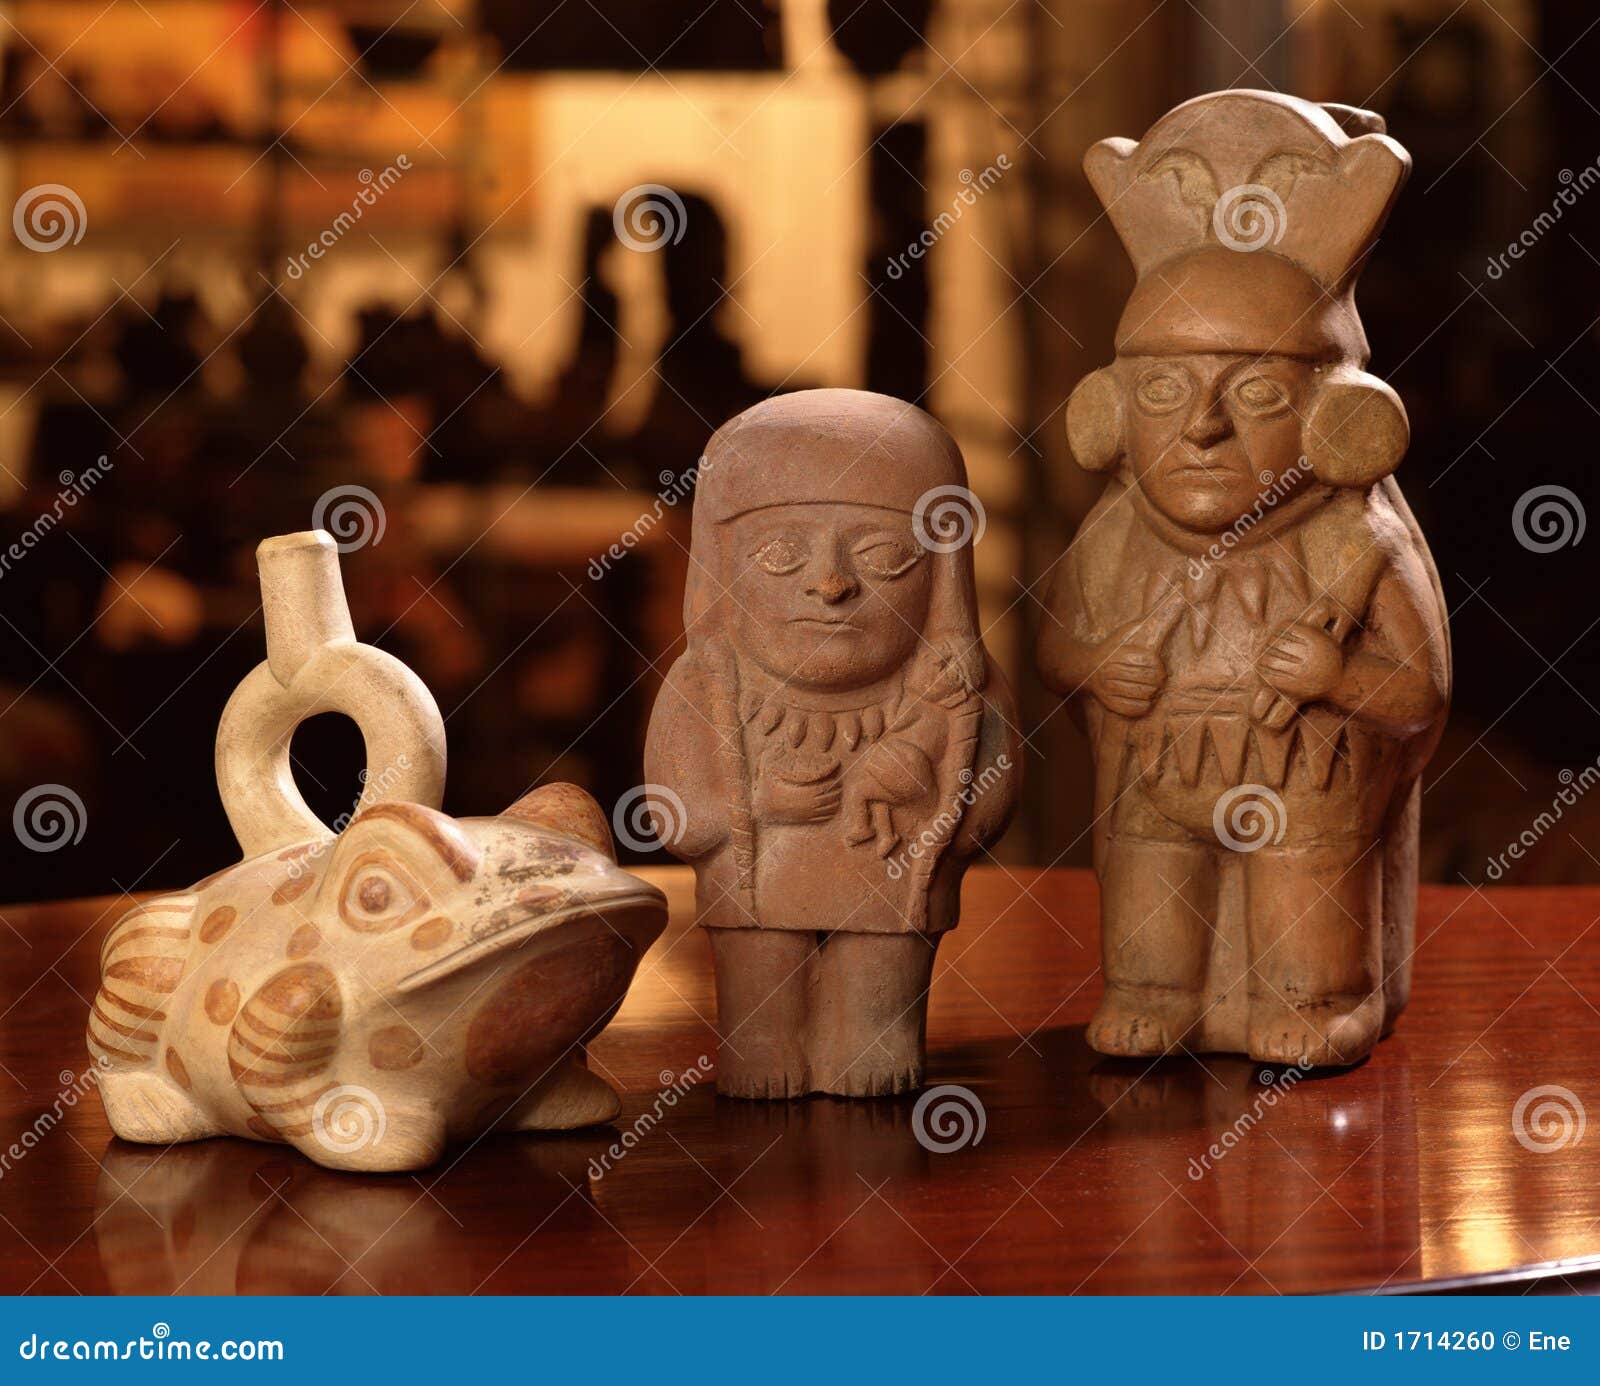 pre columbian inca pottery